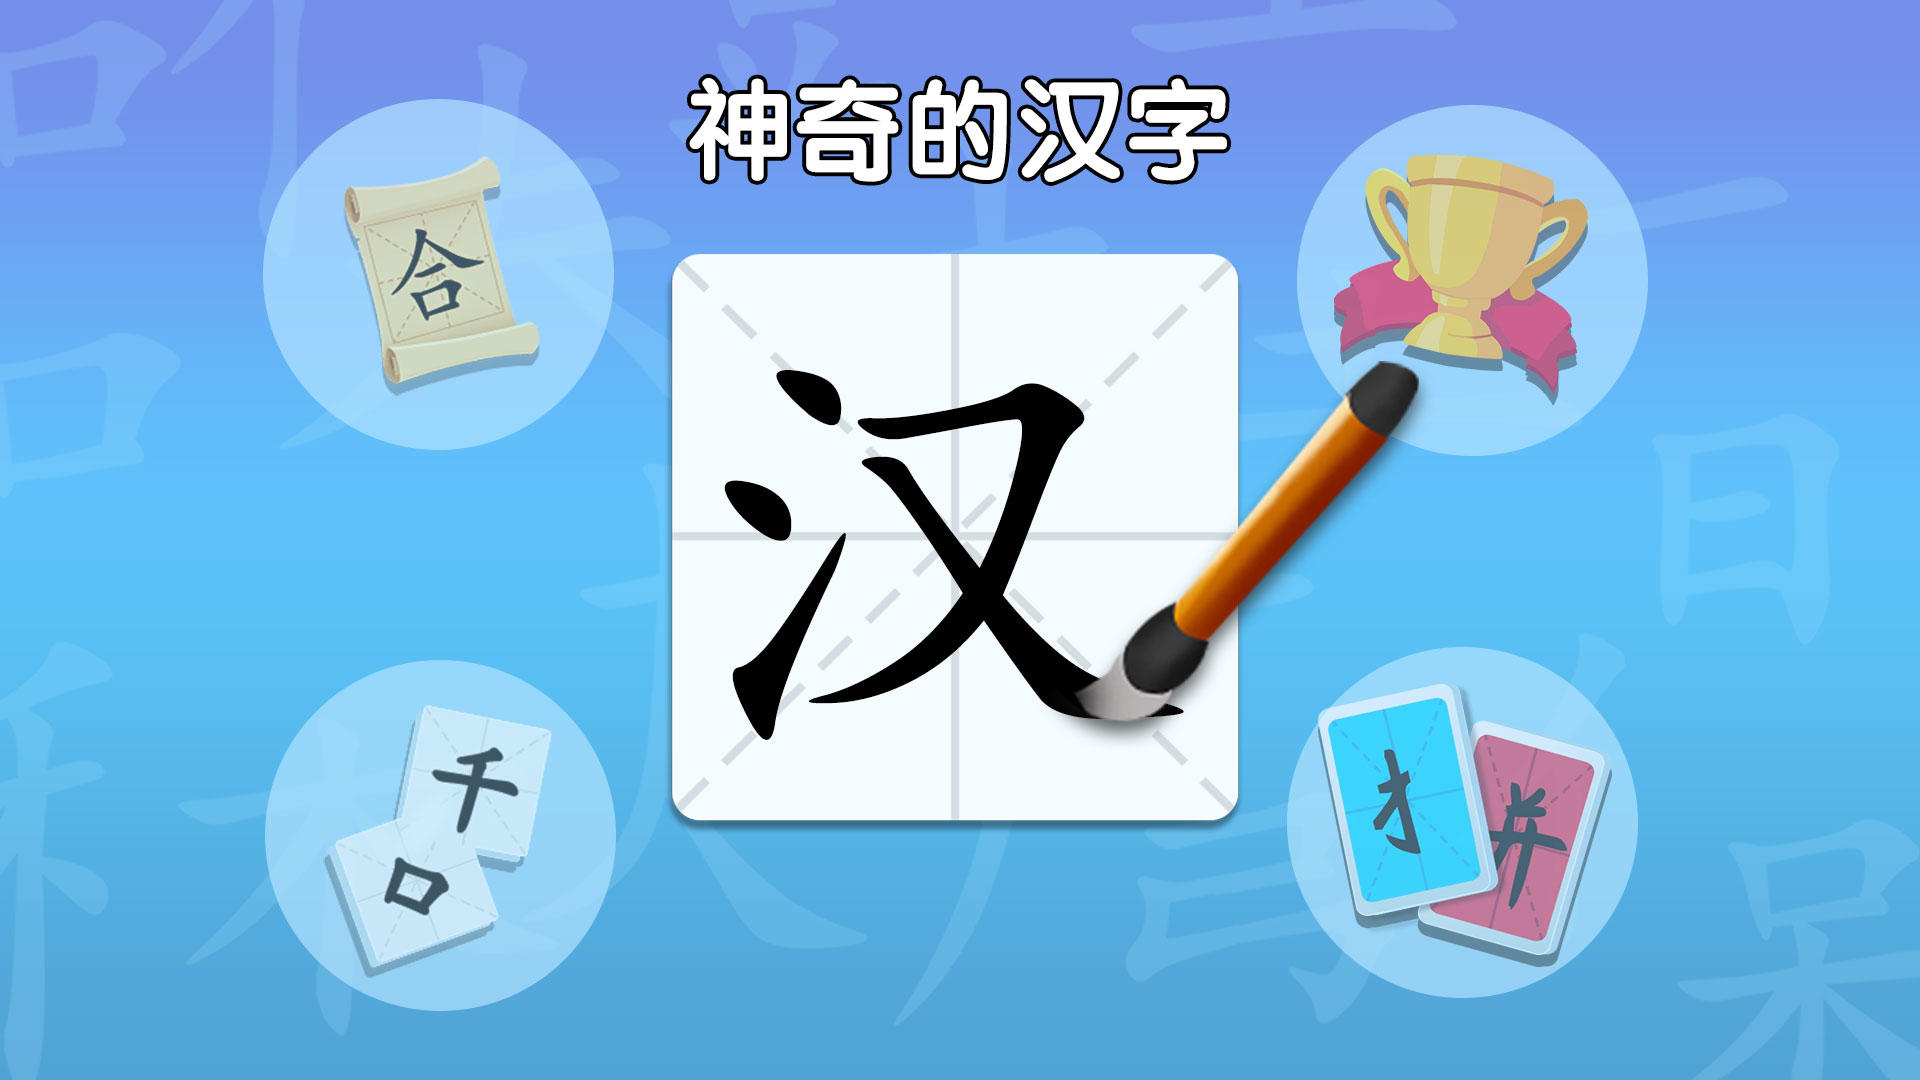 Banner of 魔法の漢字 1.3.1